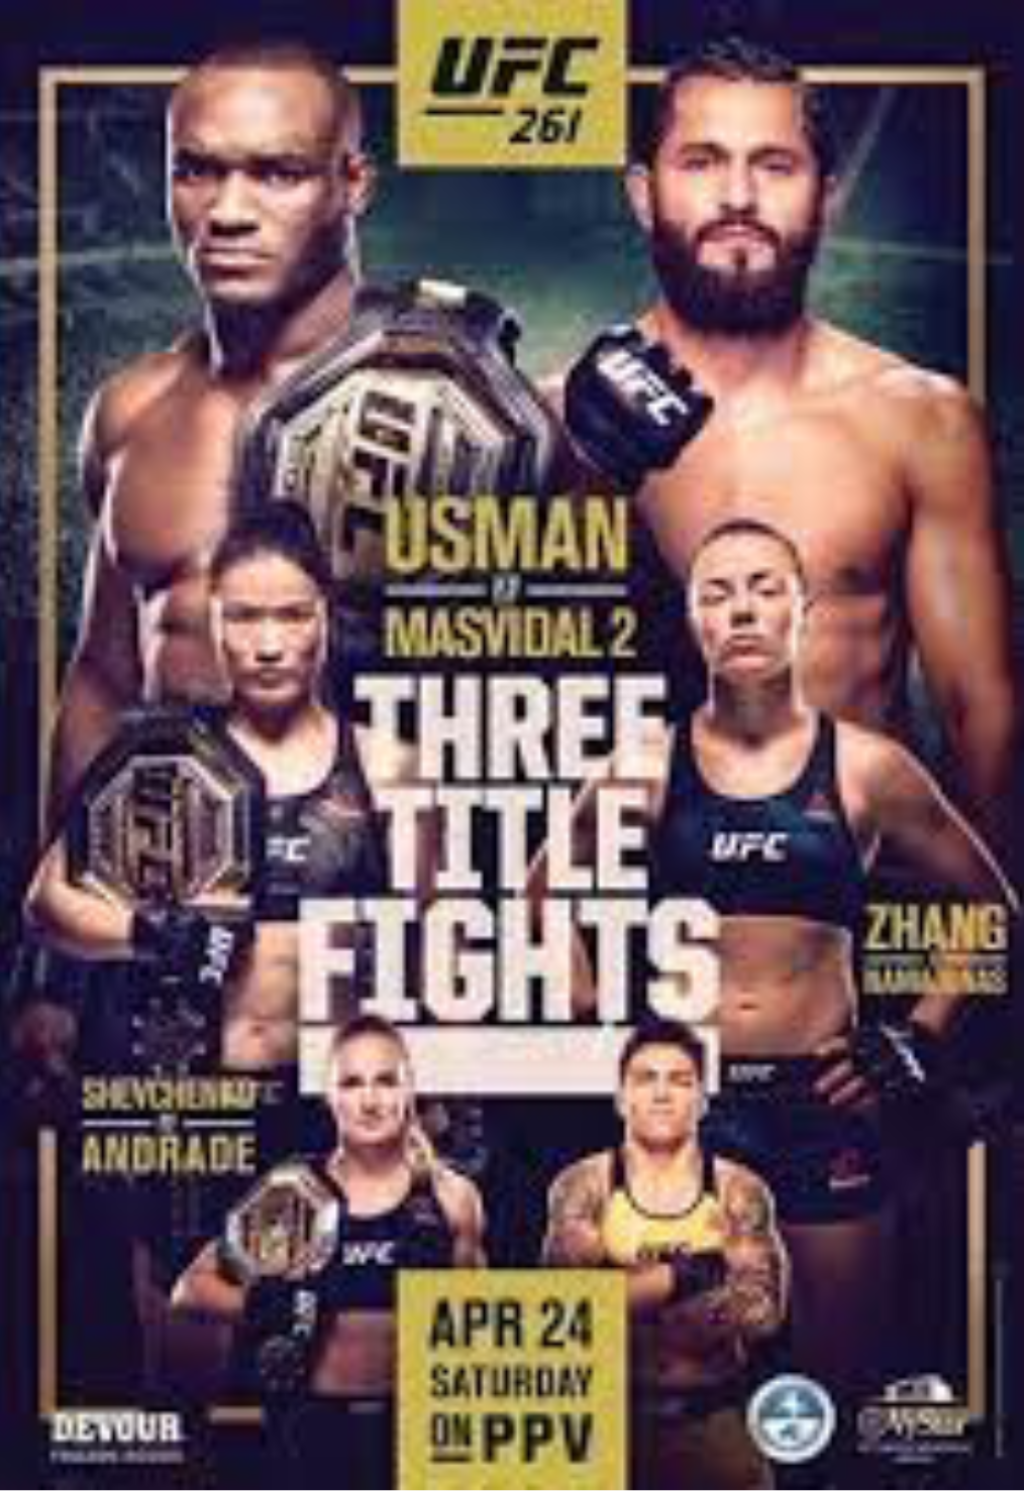 UFC 261 USMAN VS. MASVIDAL